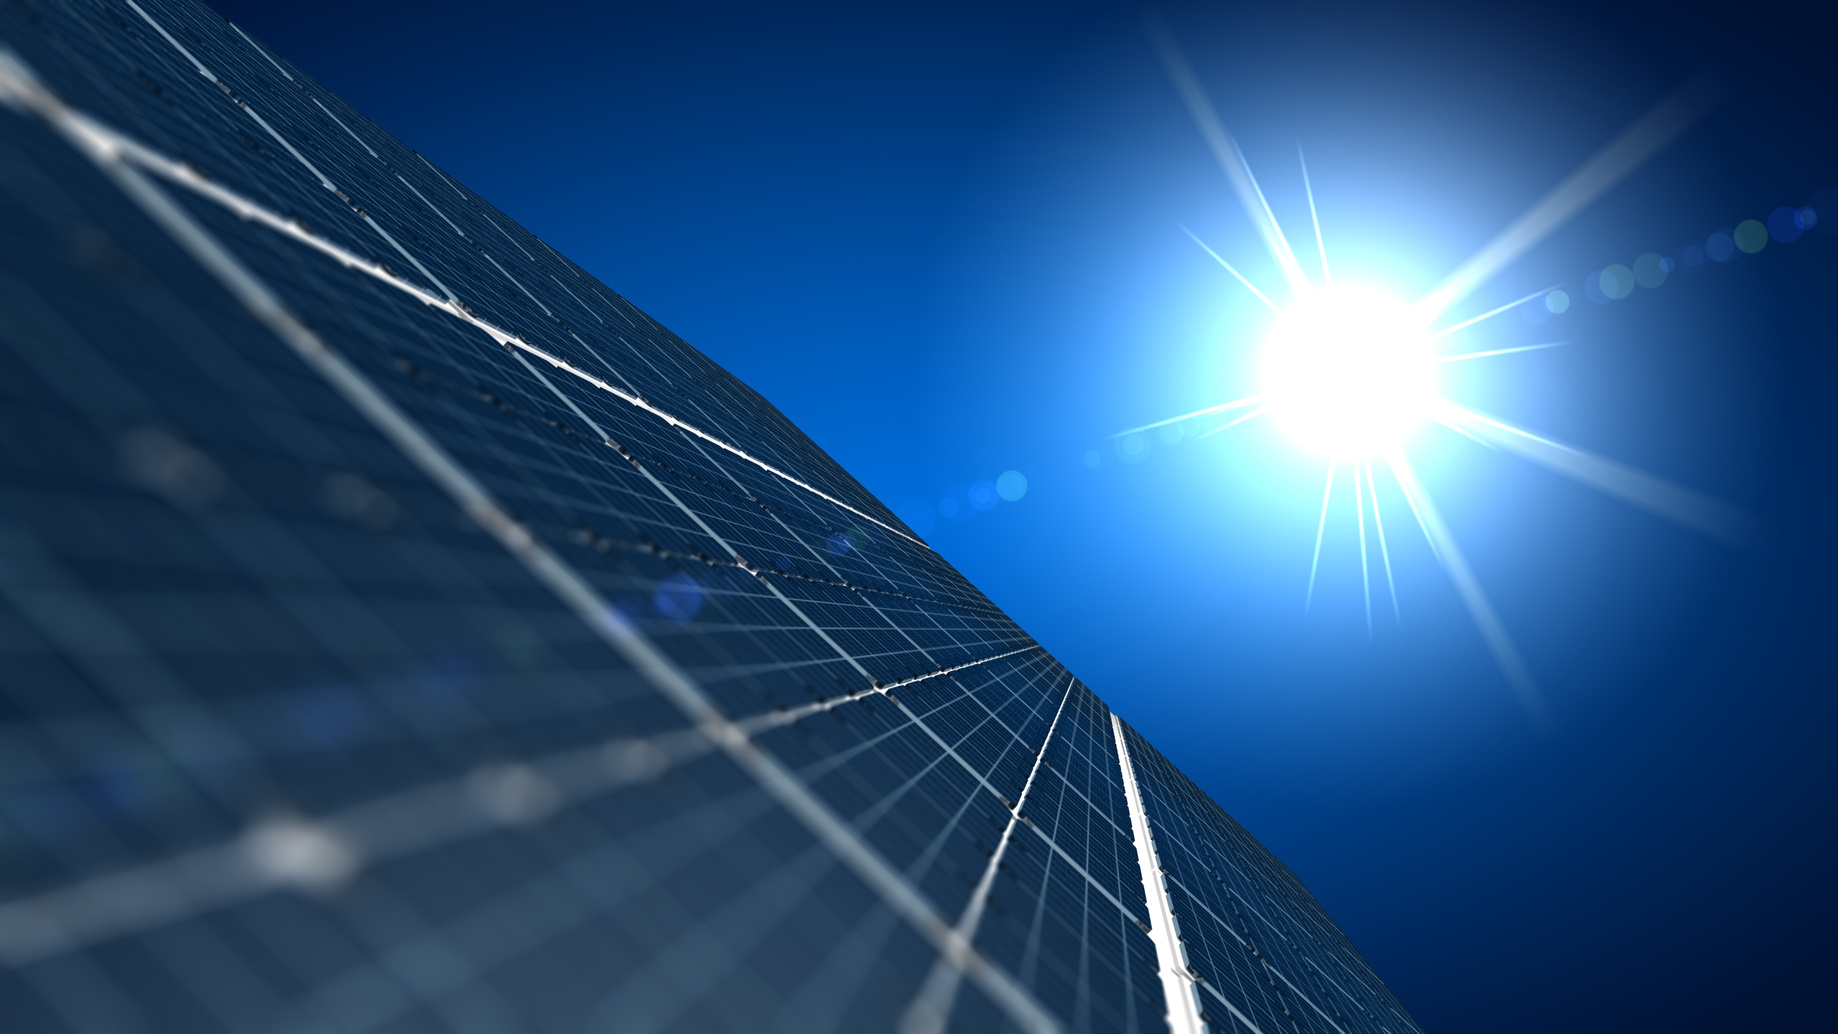 Photovoltaik  Umweltbundesamt